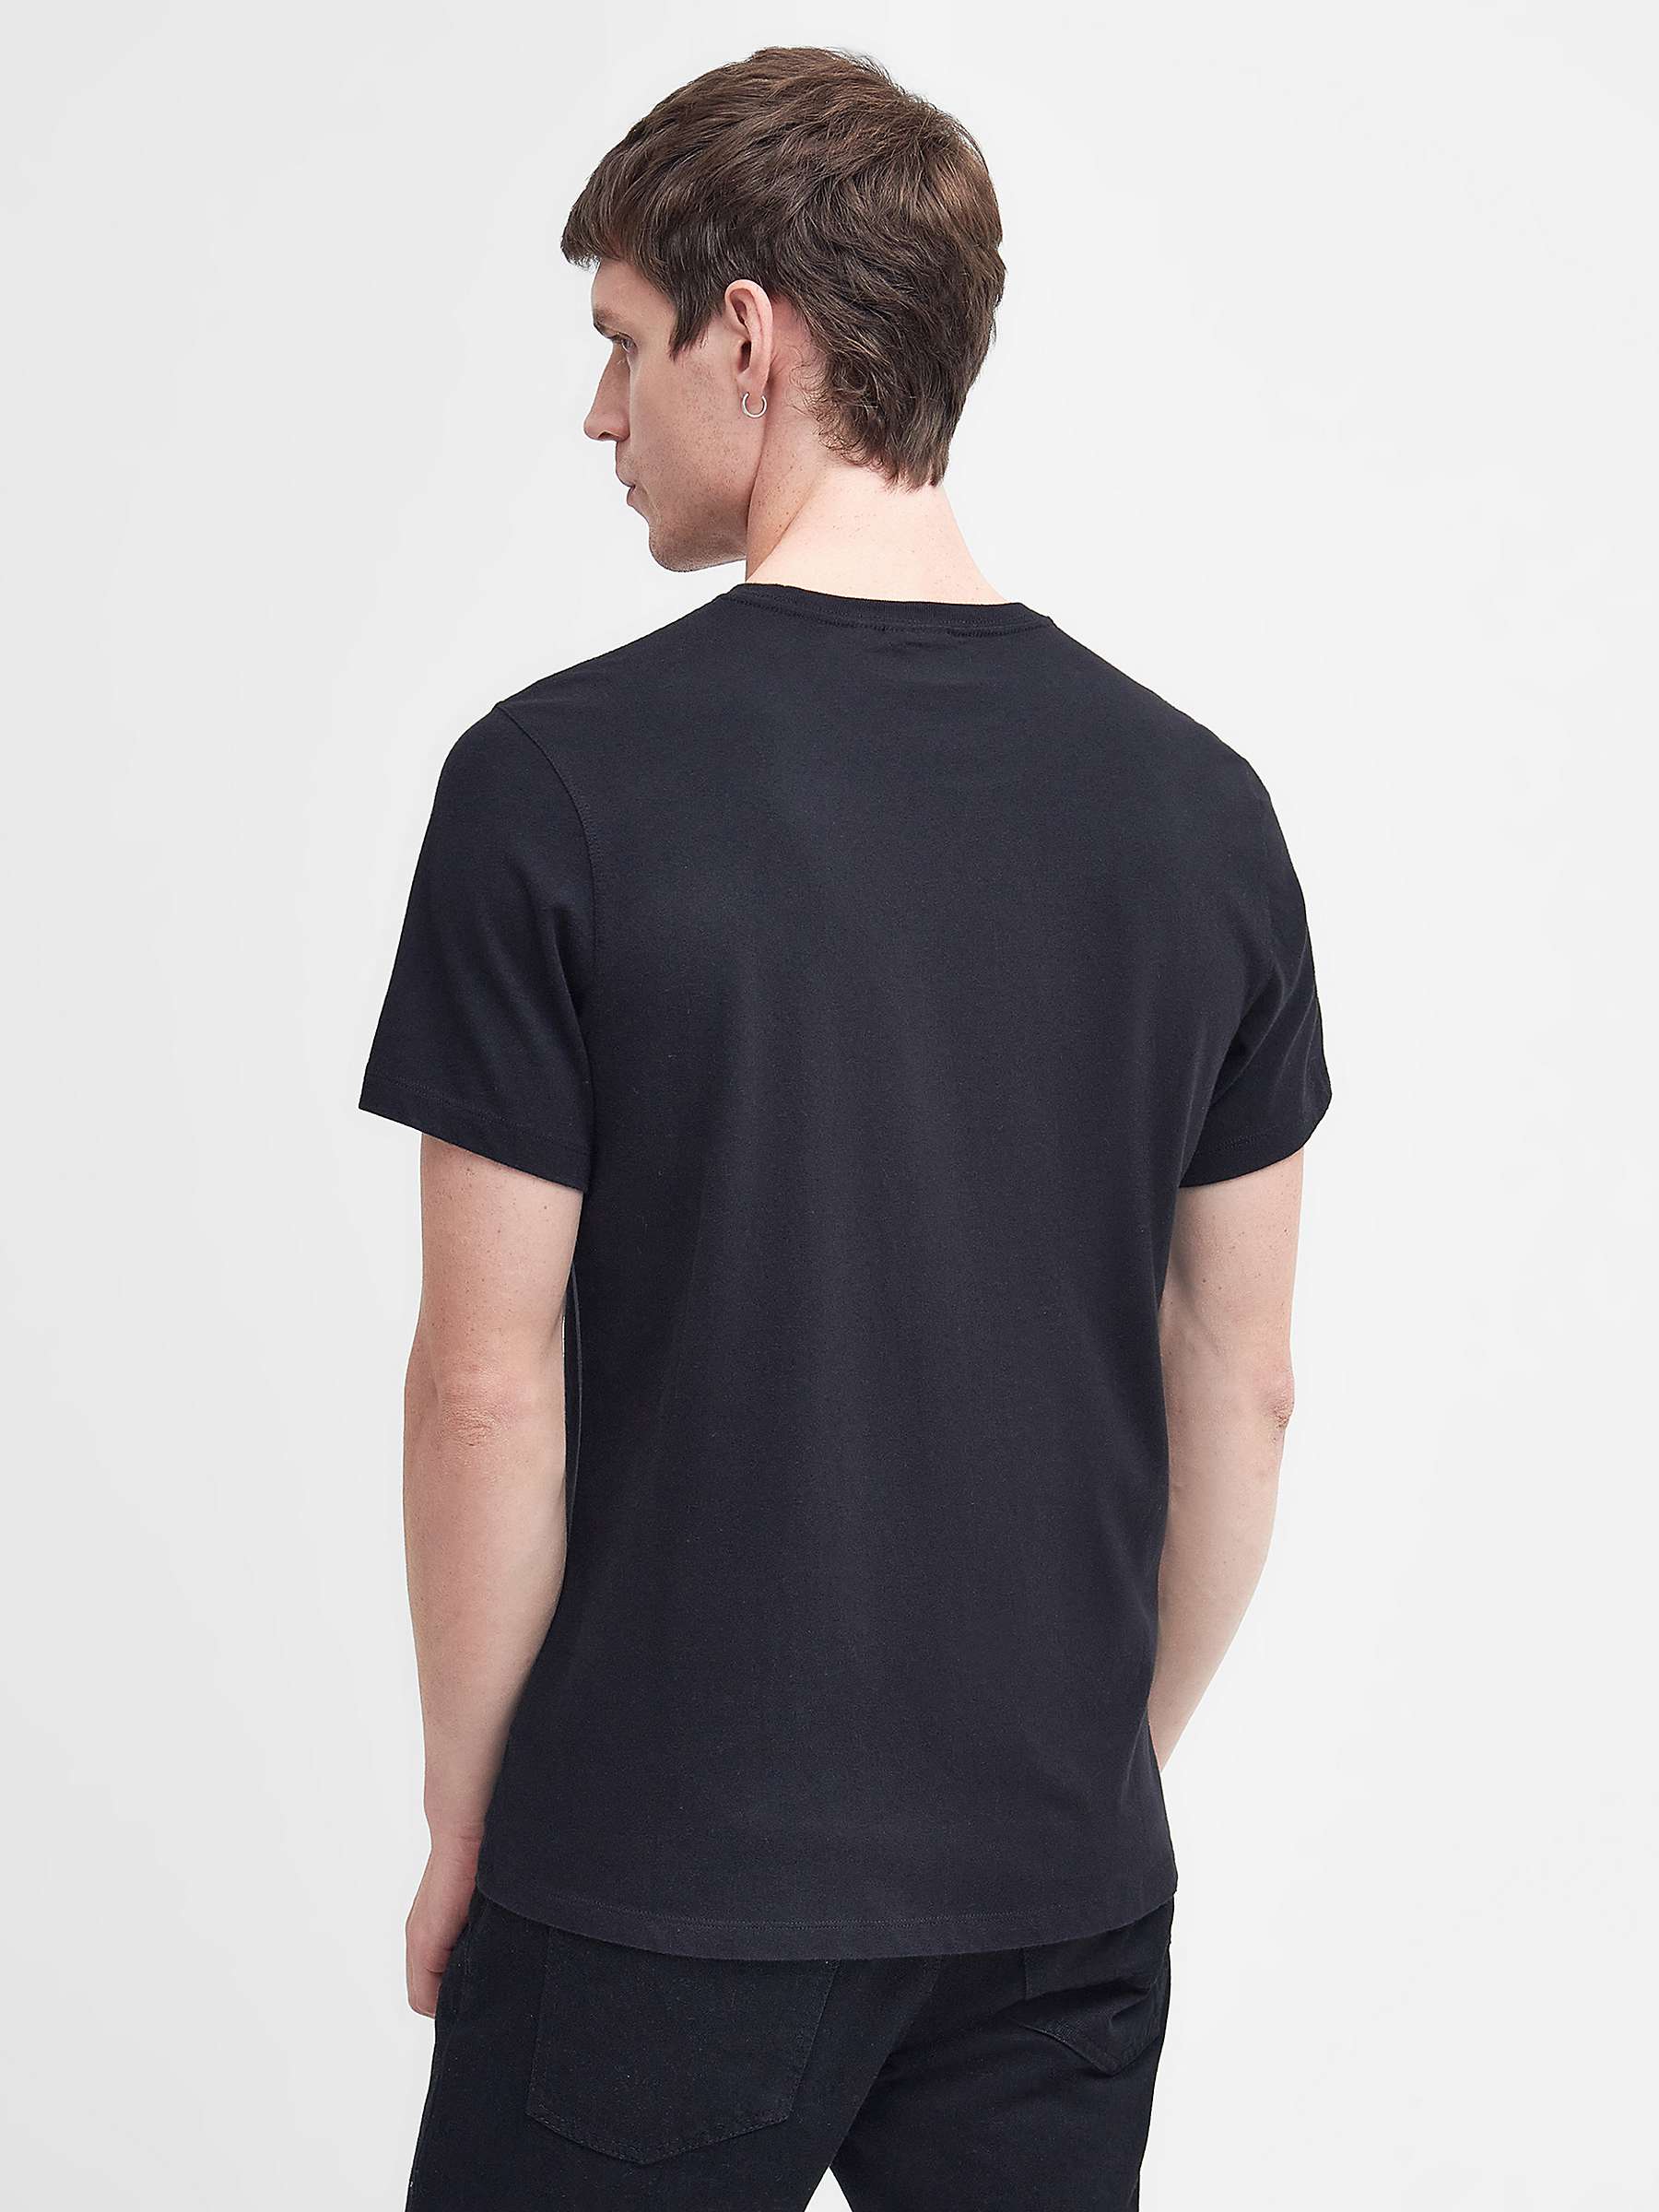 Buy Barbour International Cotton Chisel Crew Neck T-Shirt, Black Online at johnlewis.com